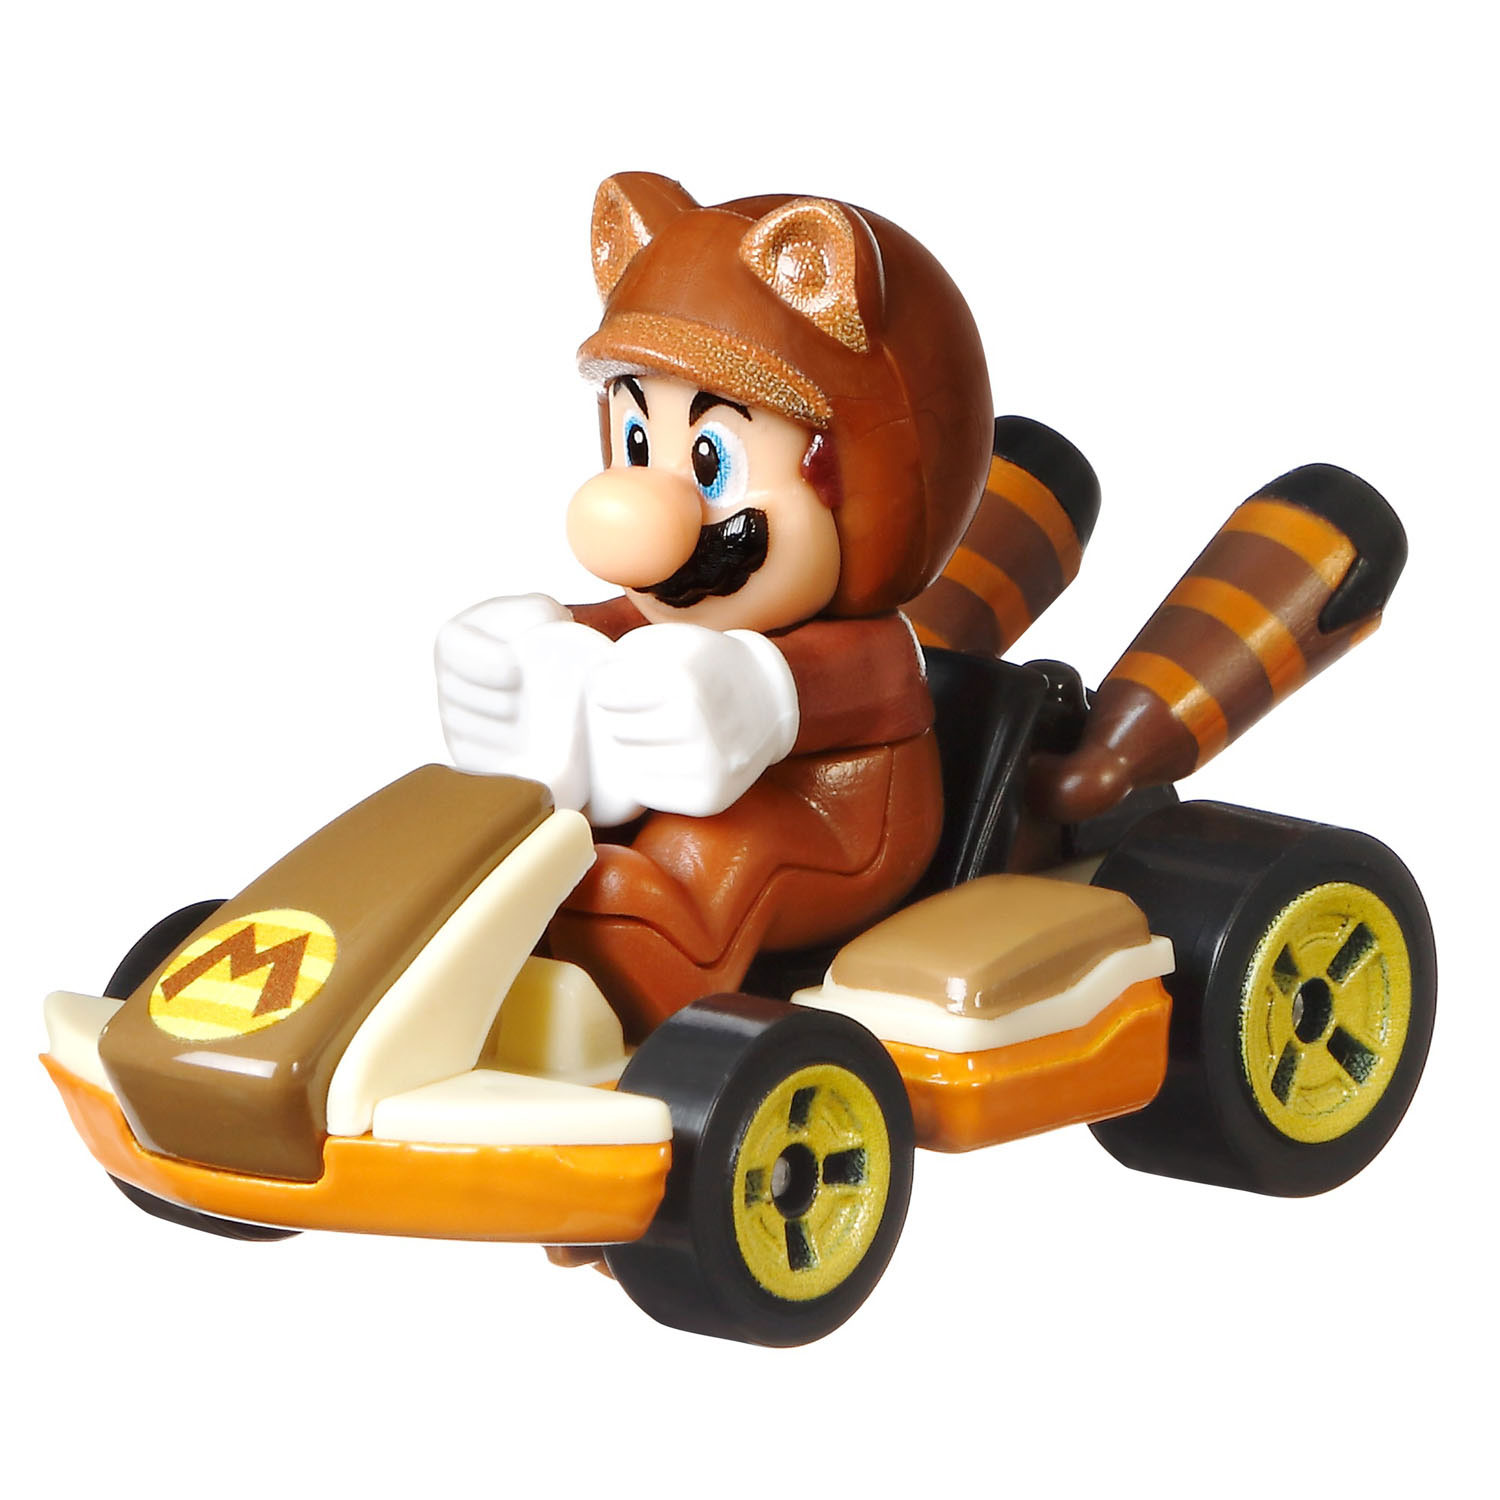 Hot Wheels Mario Kart Voertuig - Tanooki Mario